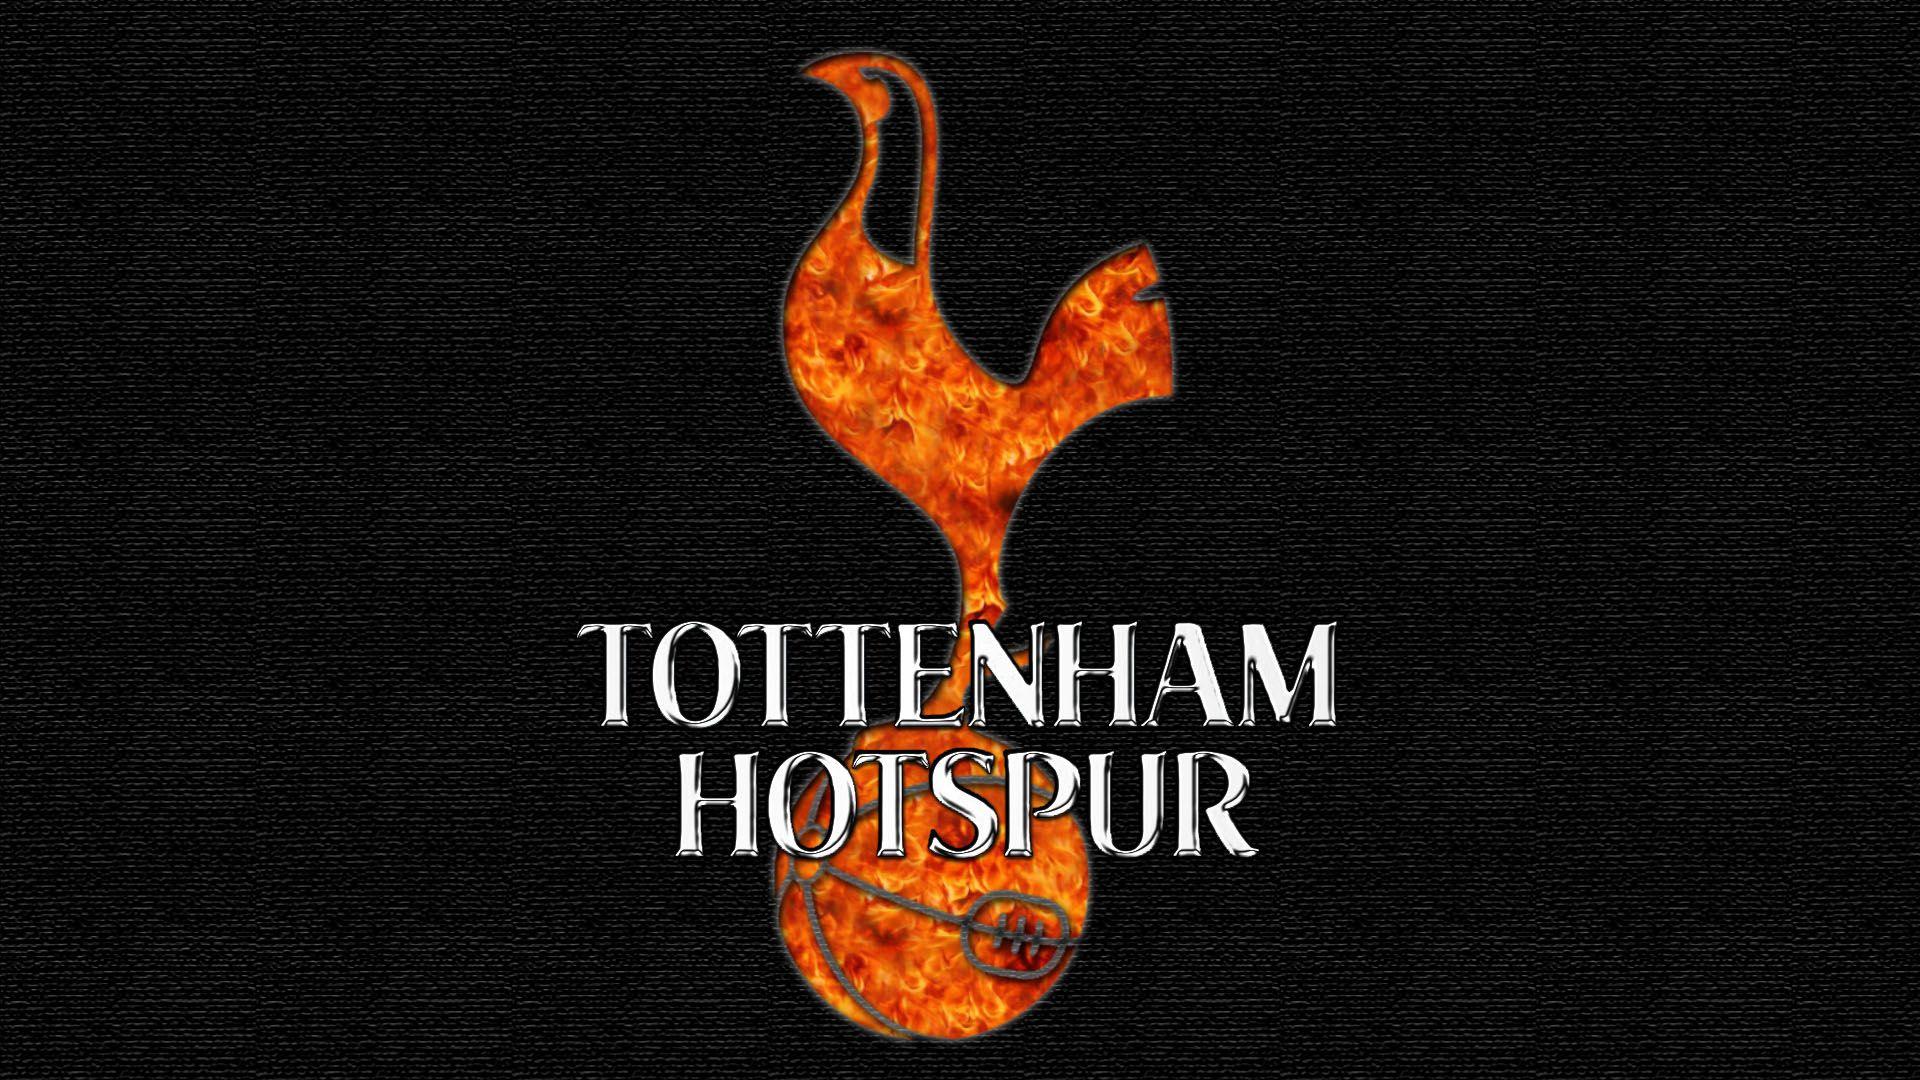 Tottenham wallpaper free download